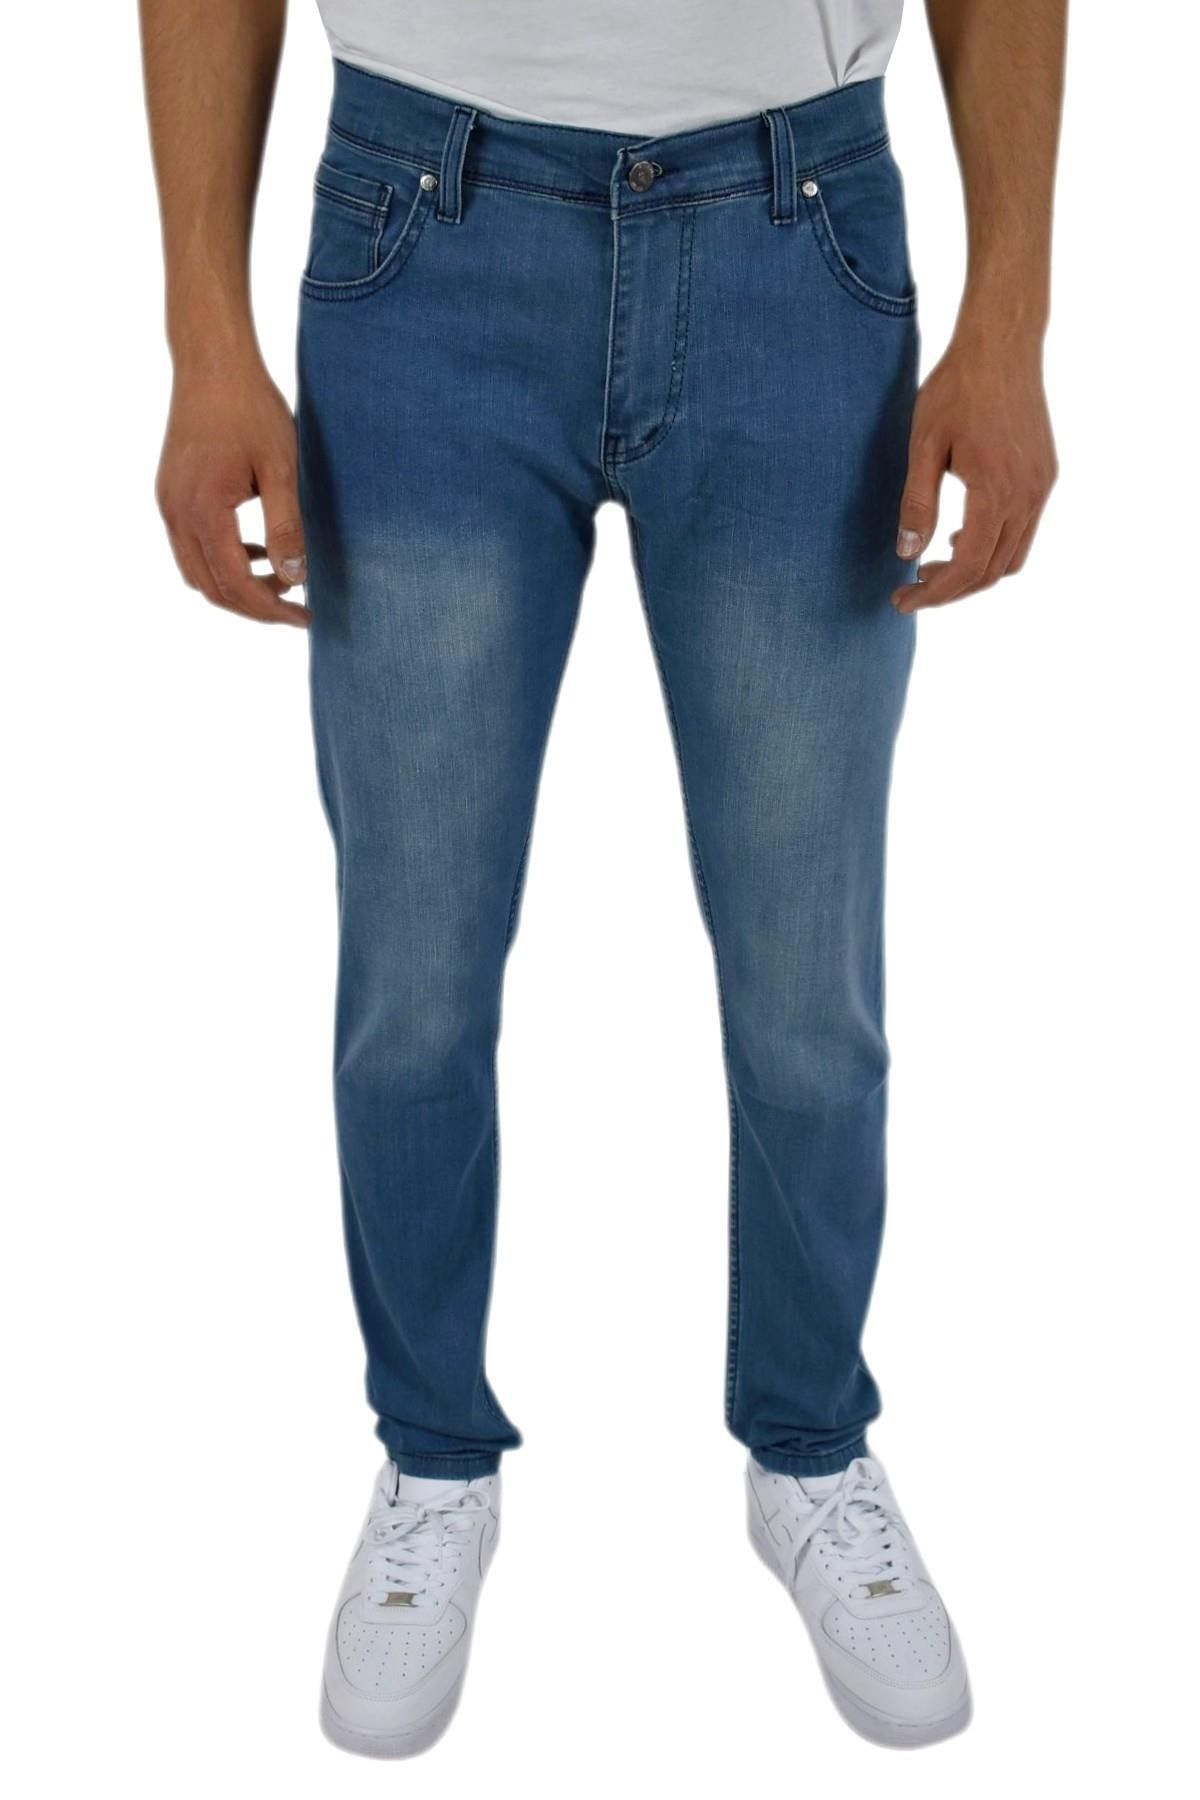 Dynamo Erkek Comfortfit Jeans Pantolon 1600 Bgl-st02911